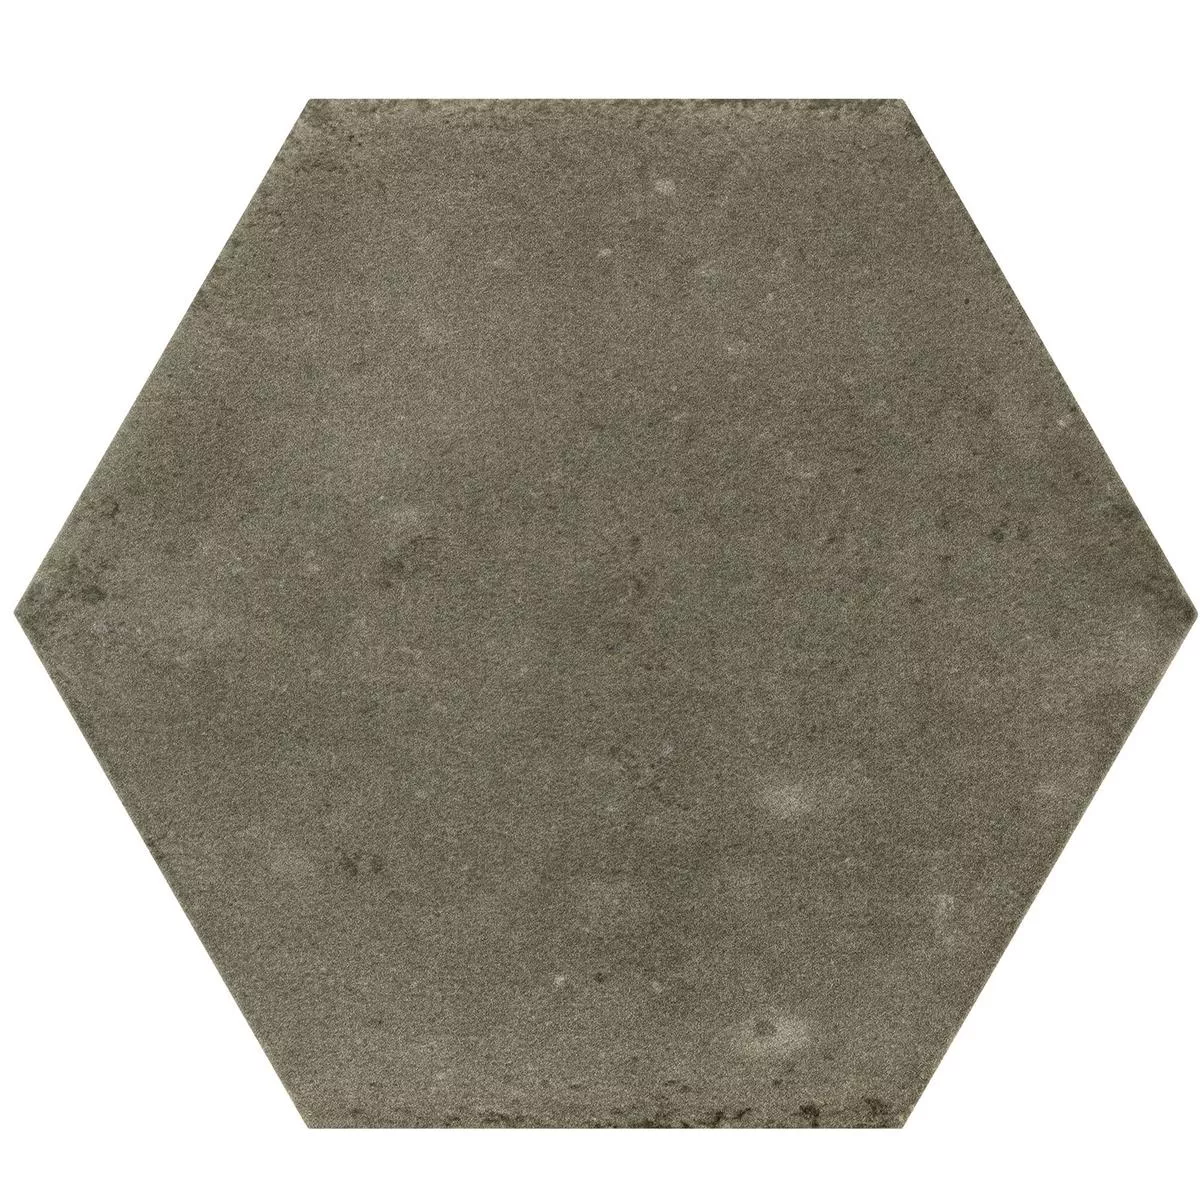 Sample Floor Tiles Arosa Mat Hexagon Braun17,3x15cm